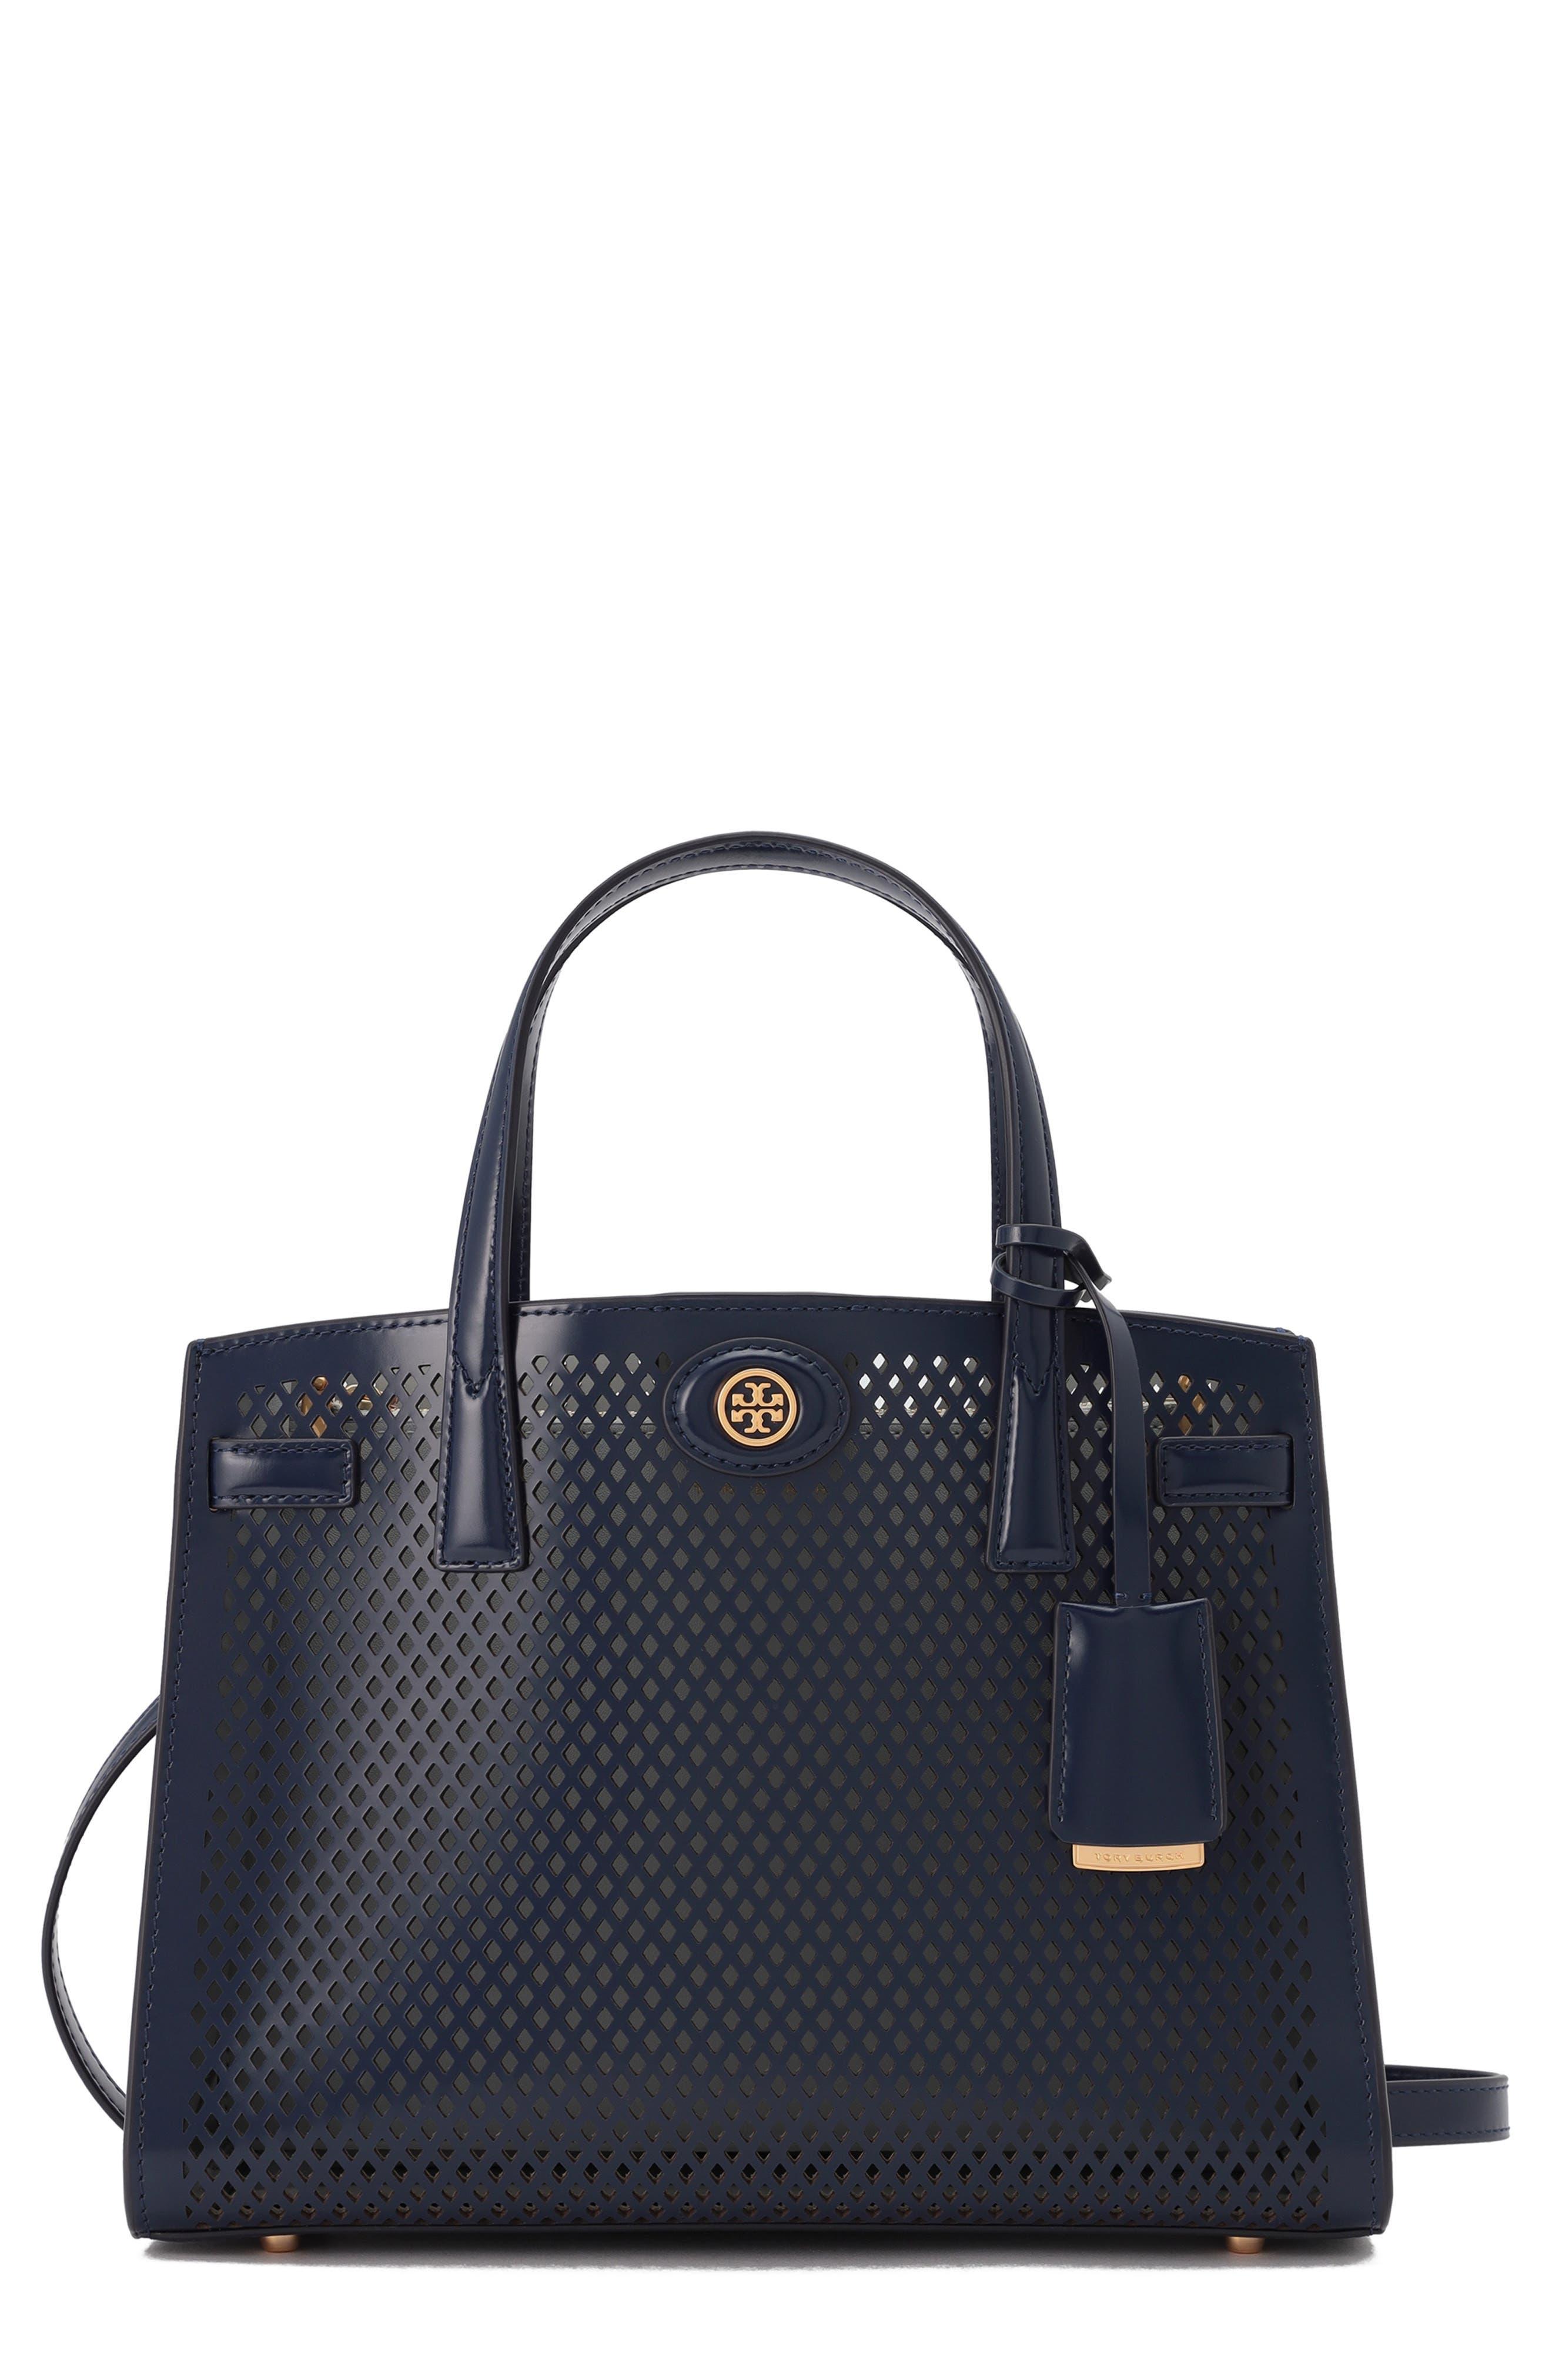 Small Robinson Perforated Satchel: Women's Handbags, Satchels